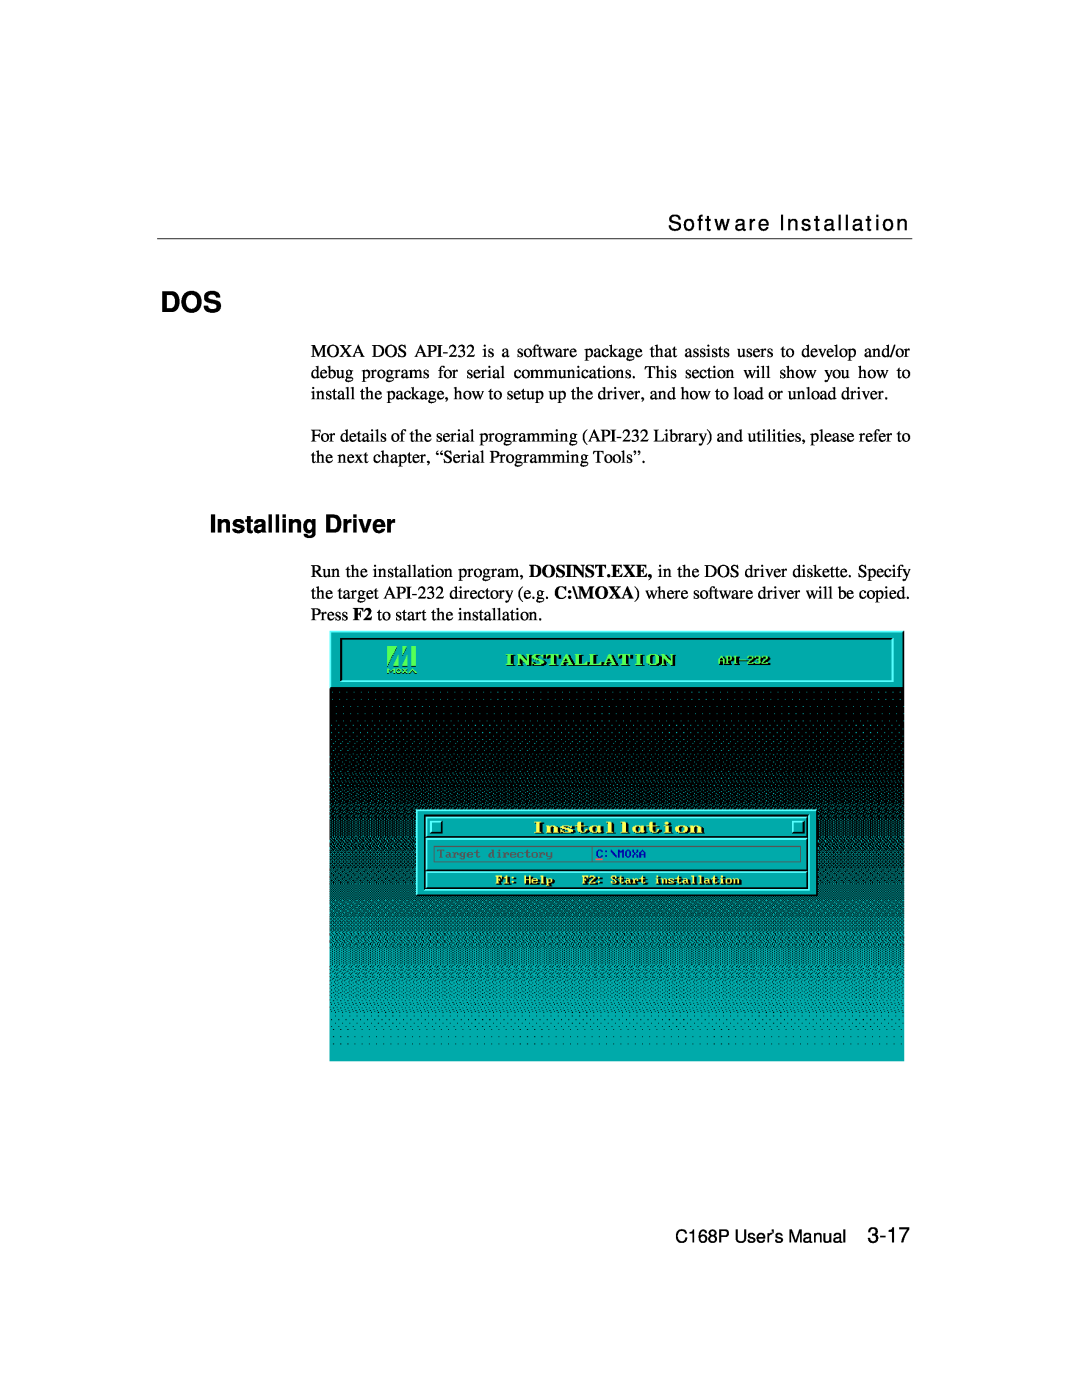 Moxa Technologies C168P user manual Installing Driver, Software Installation 